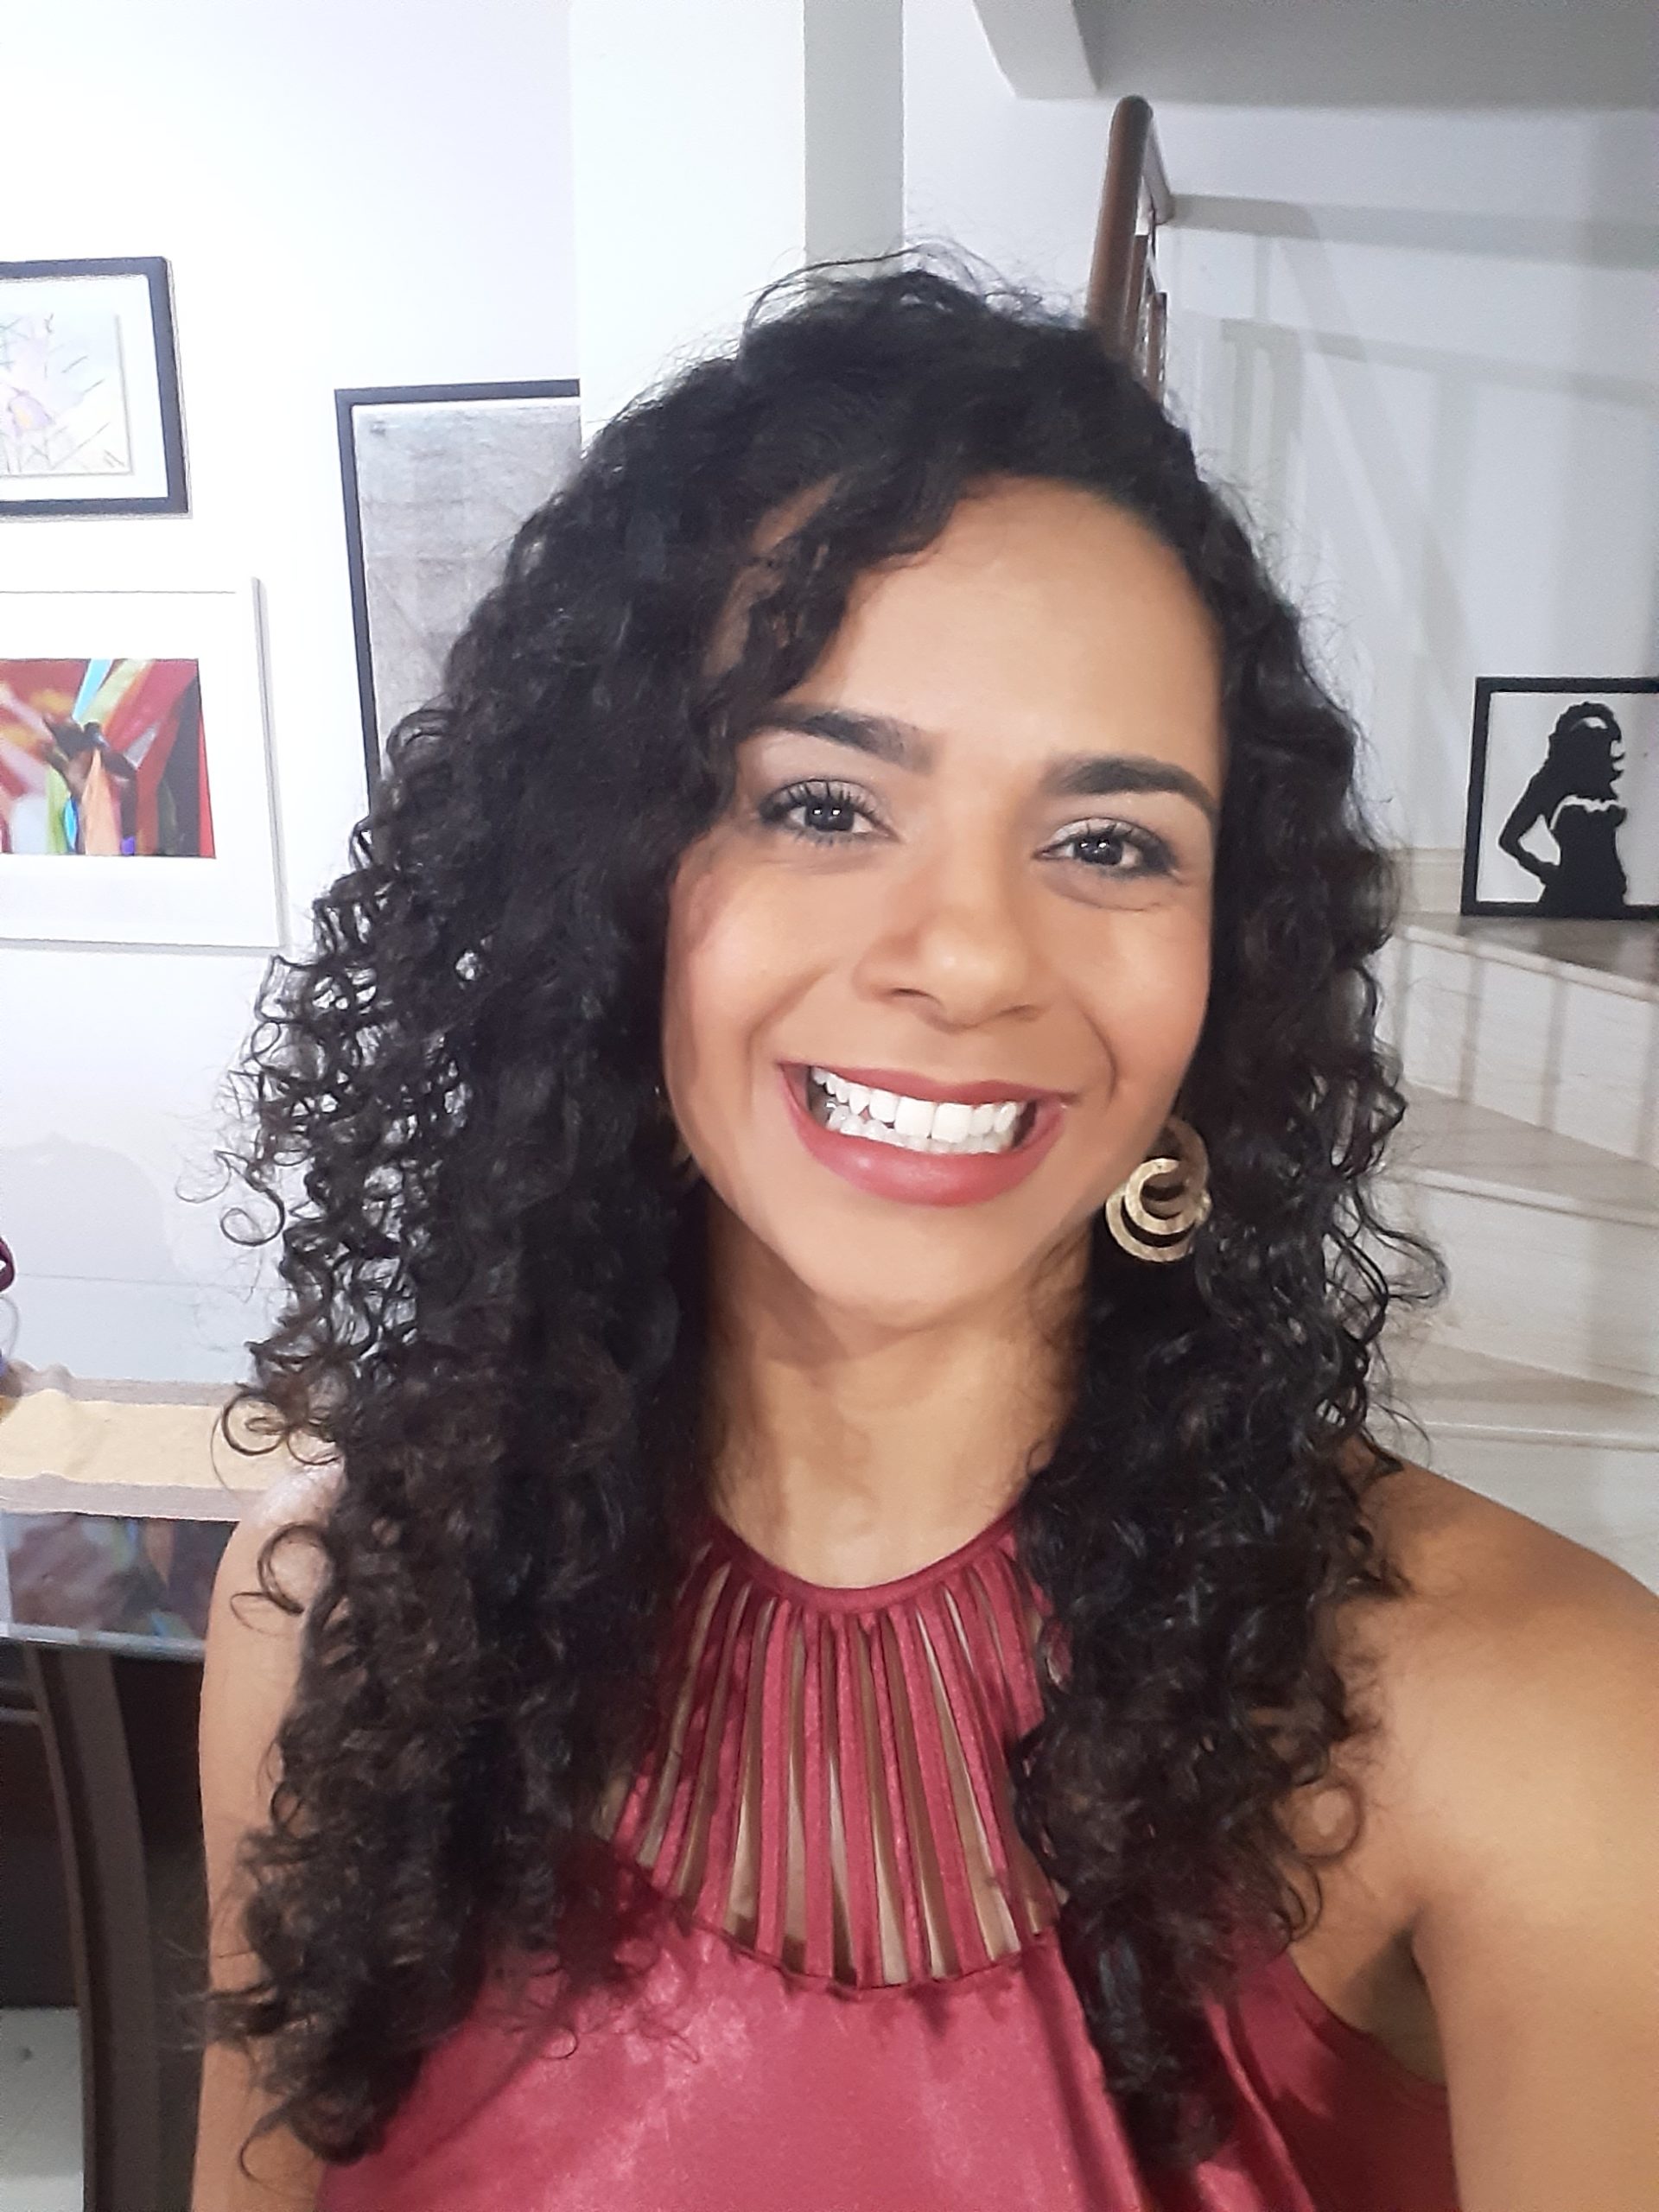 Thanandra Taiza Pereira Dias